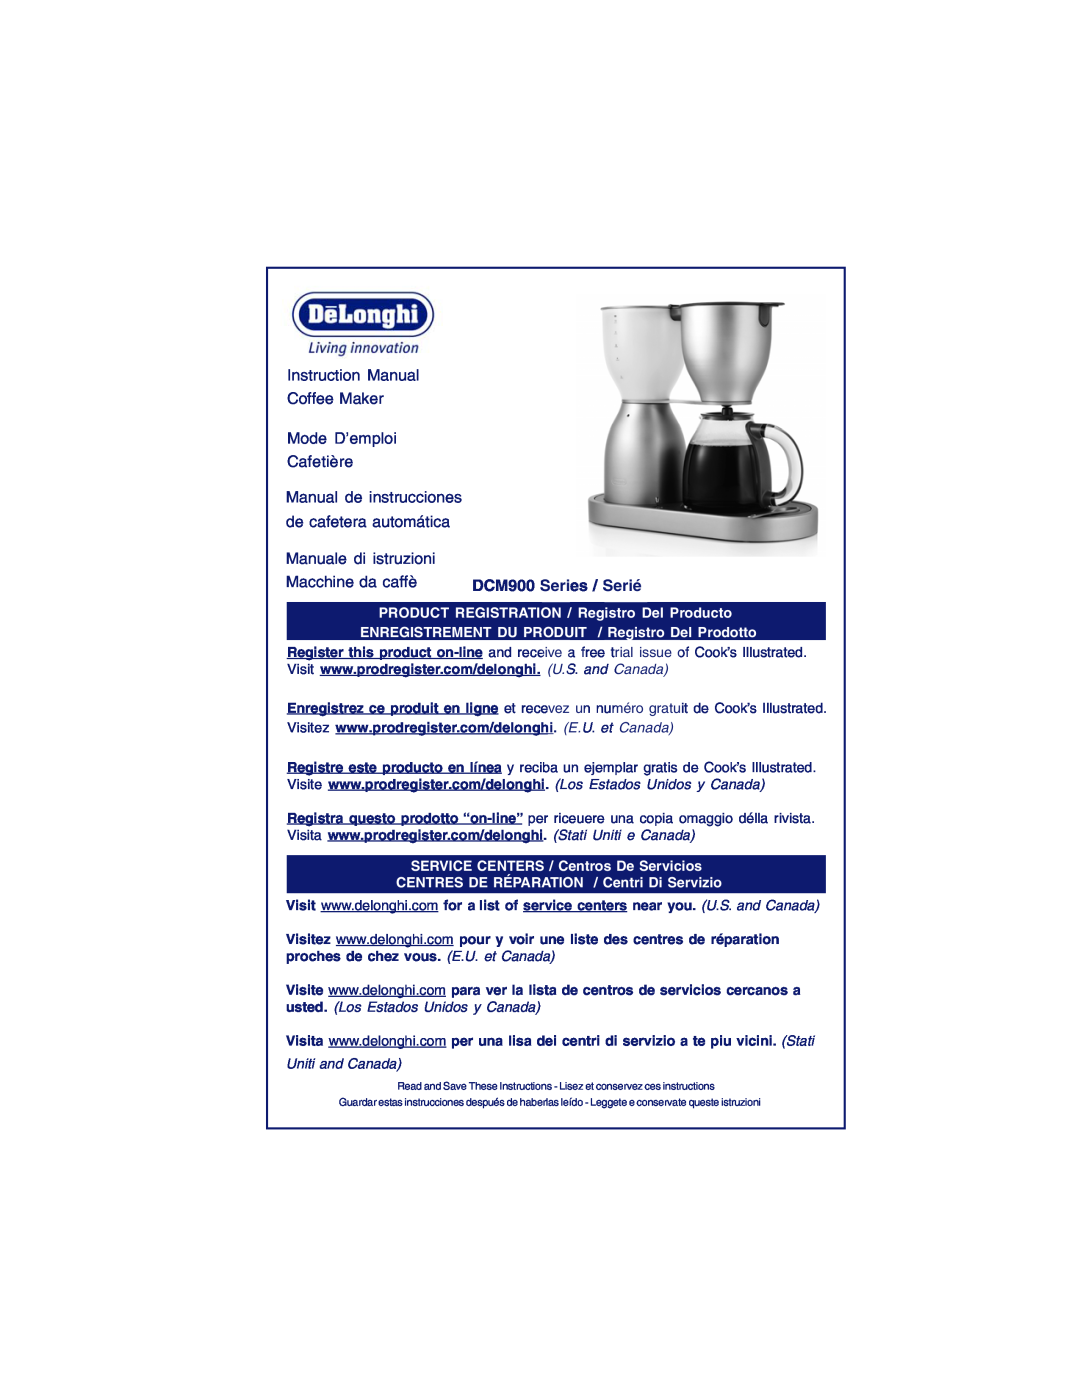 DeLonghi DCM900 instruction manual Instruction Manual Coffee Maker Mode D’emploi, Cafetière, Manuale di istruzioni 